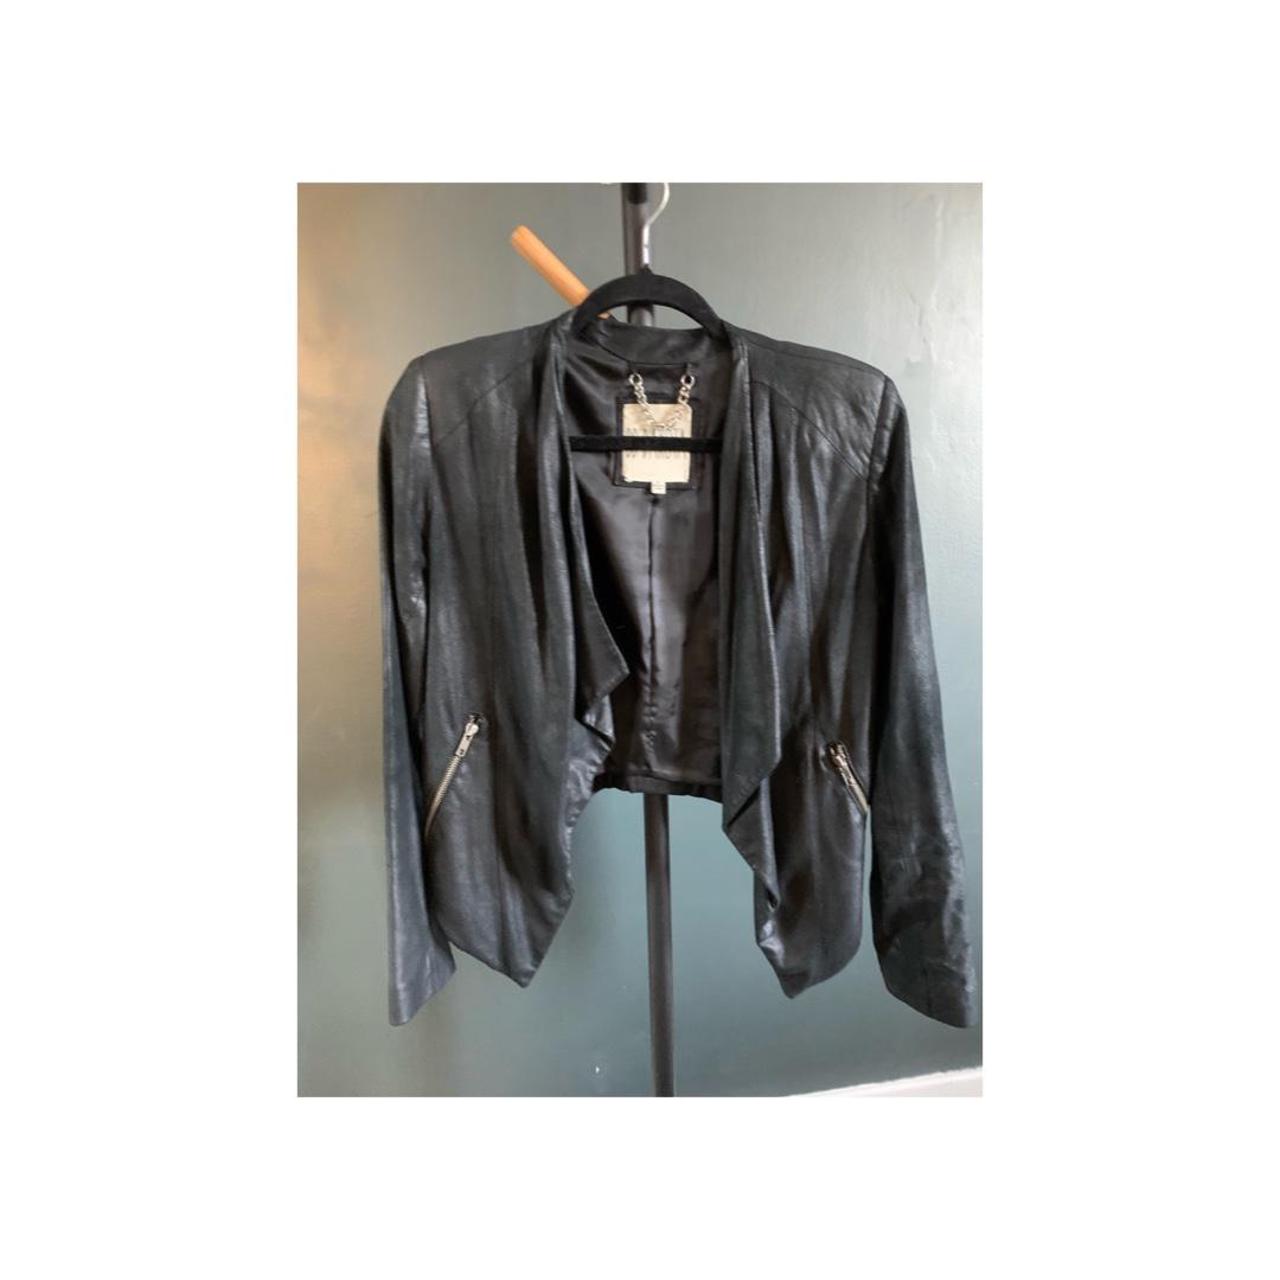 Product Image 1 - Beautiful suede leather draped jacket